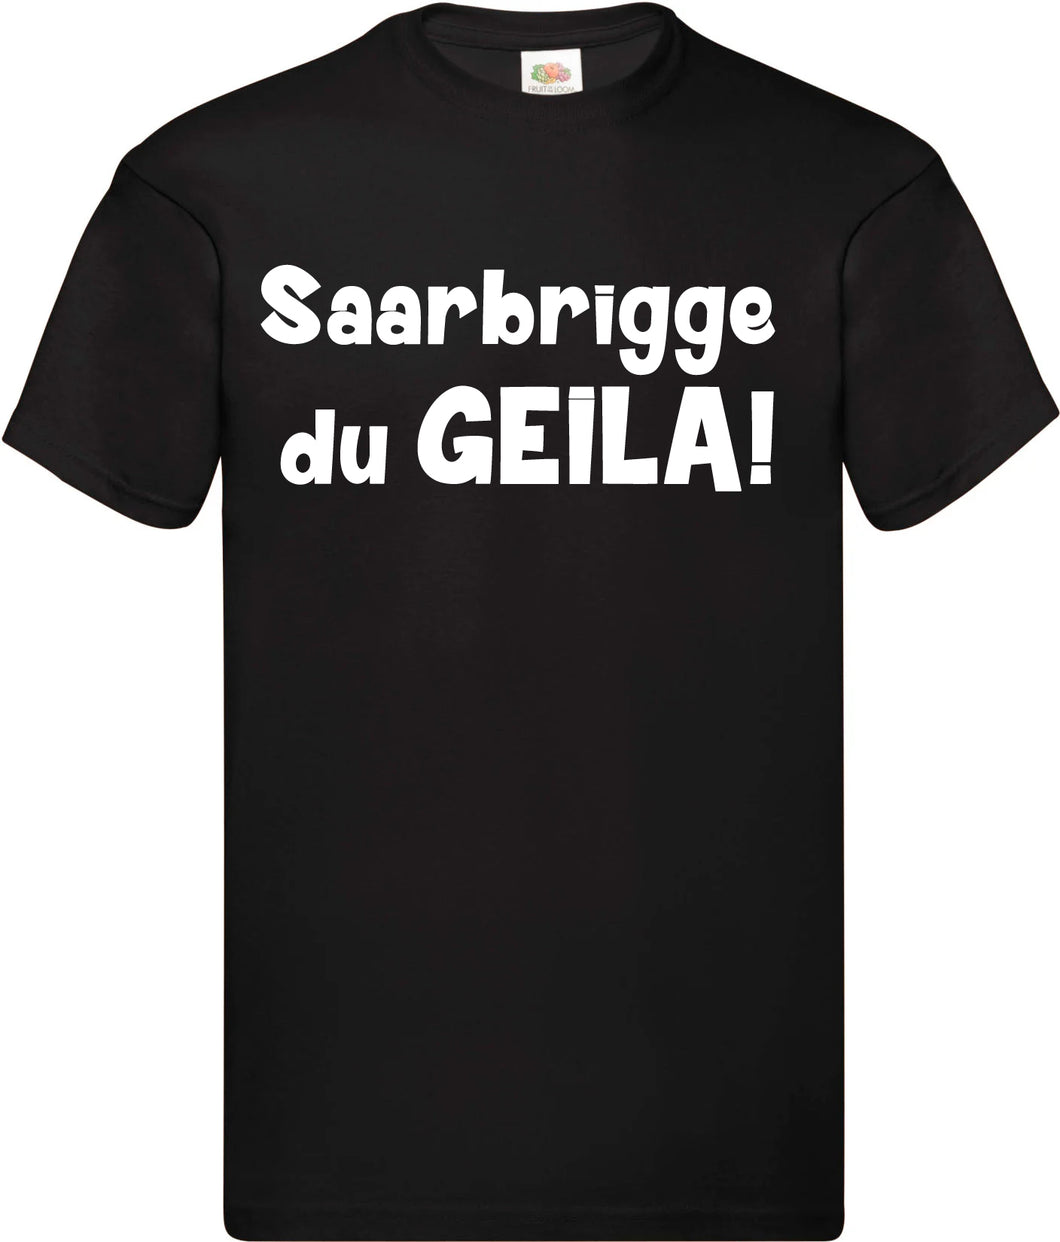 T-Shirt - Saarbrigge du GEILA!